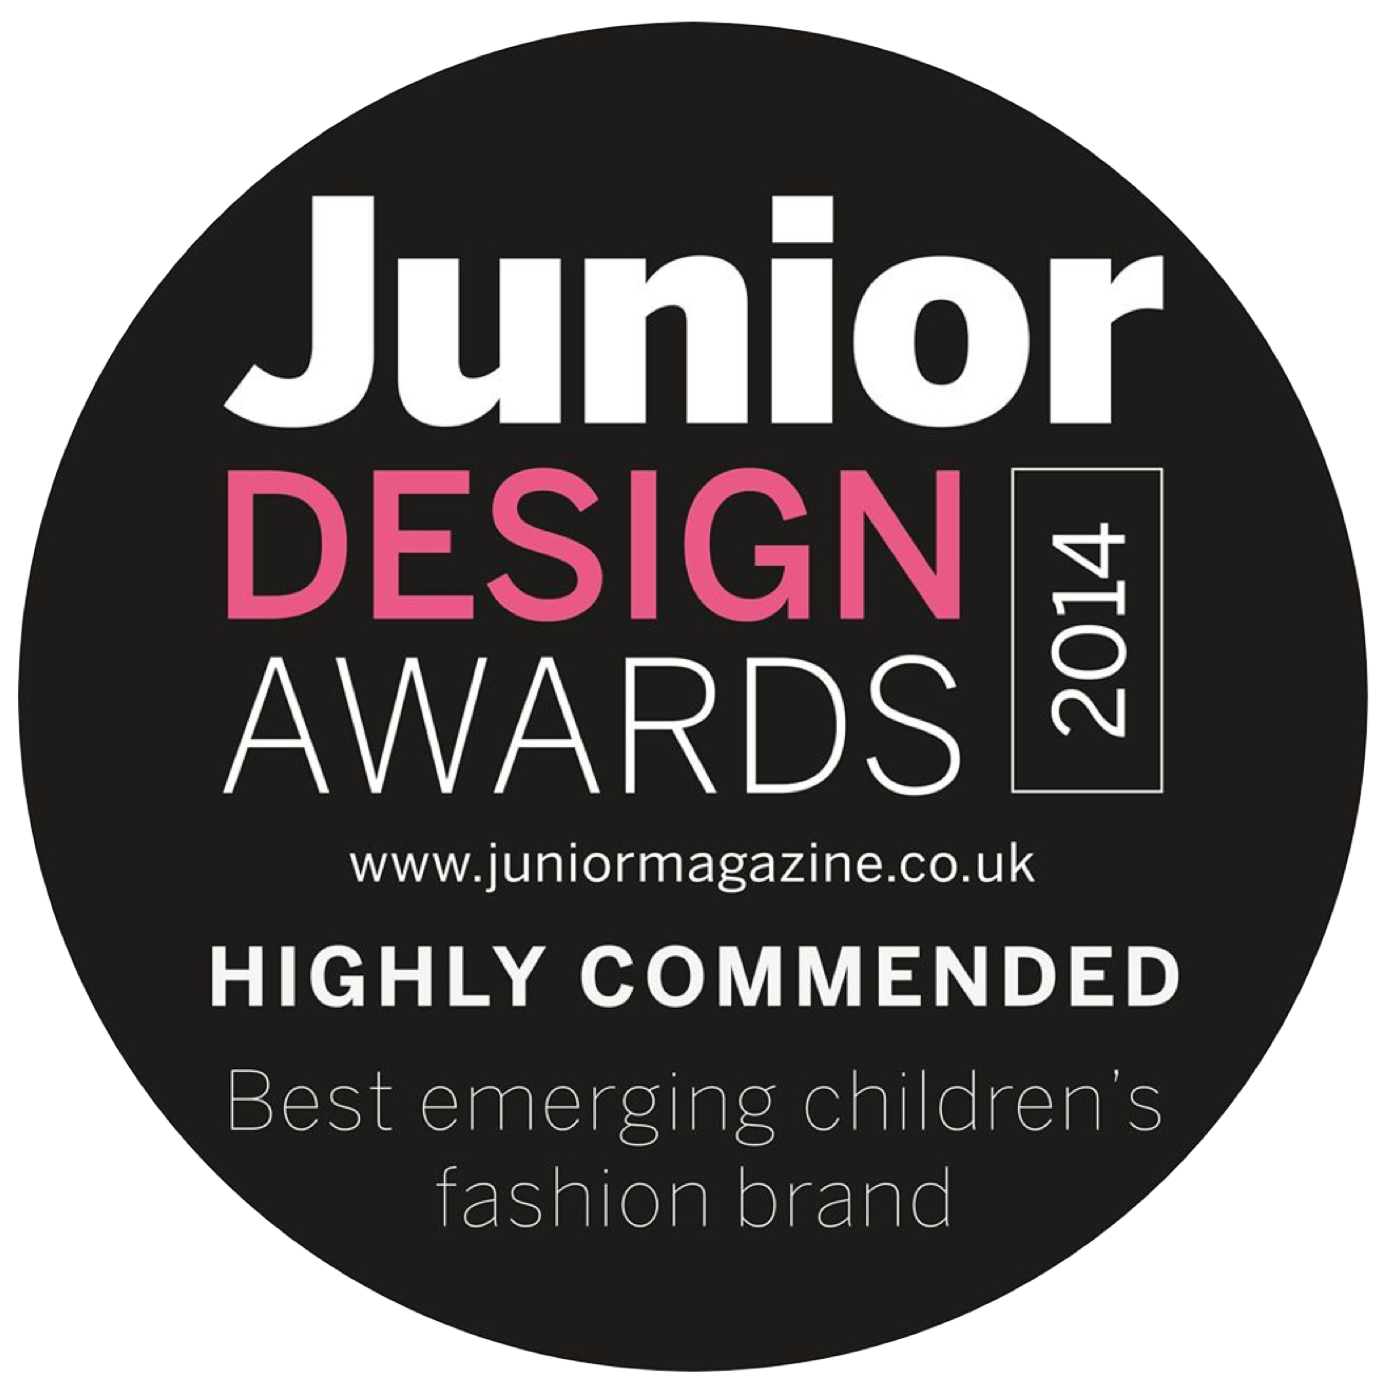 Junior Design Awards 2014: Highly Commended